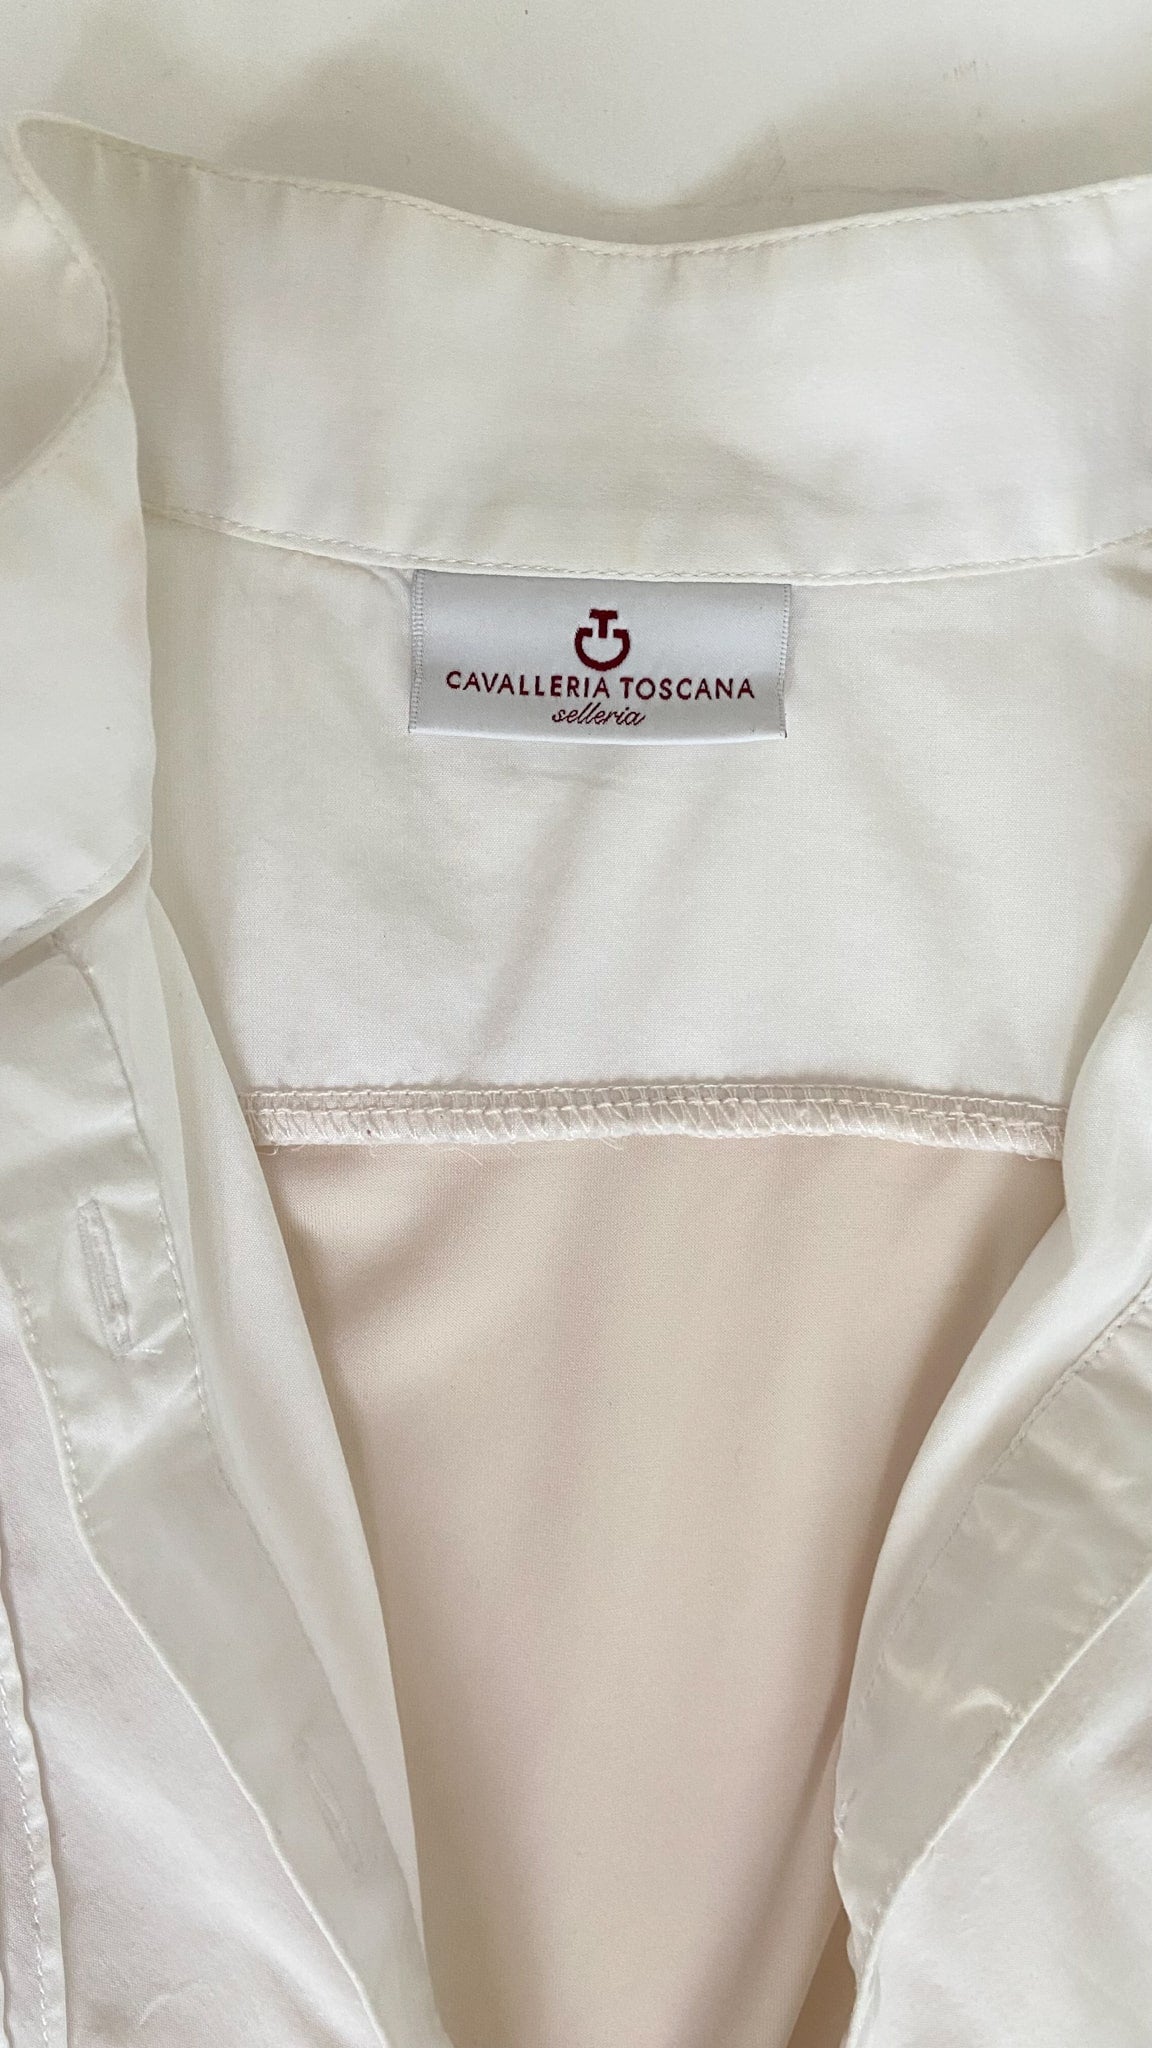 Cavalleria Toscana Competition Shirt - Blush/White - Women's XS